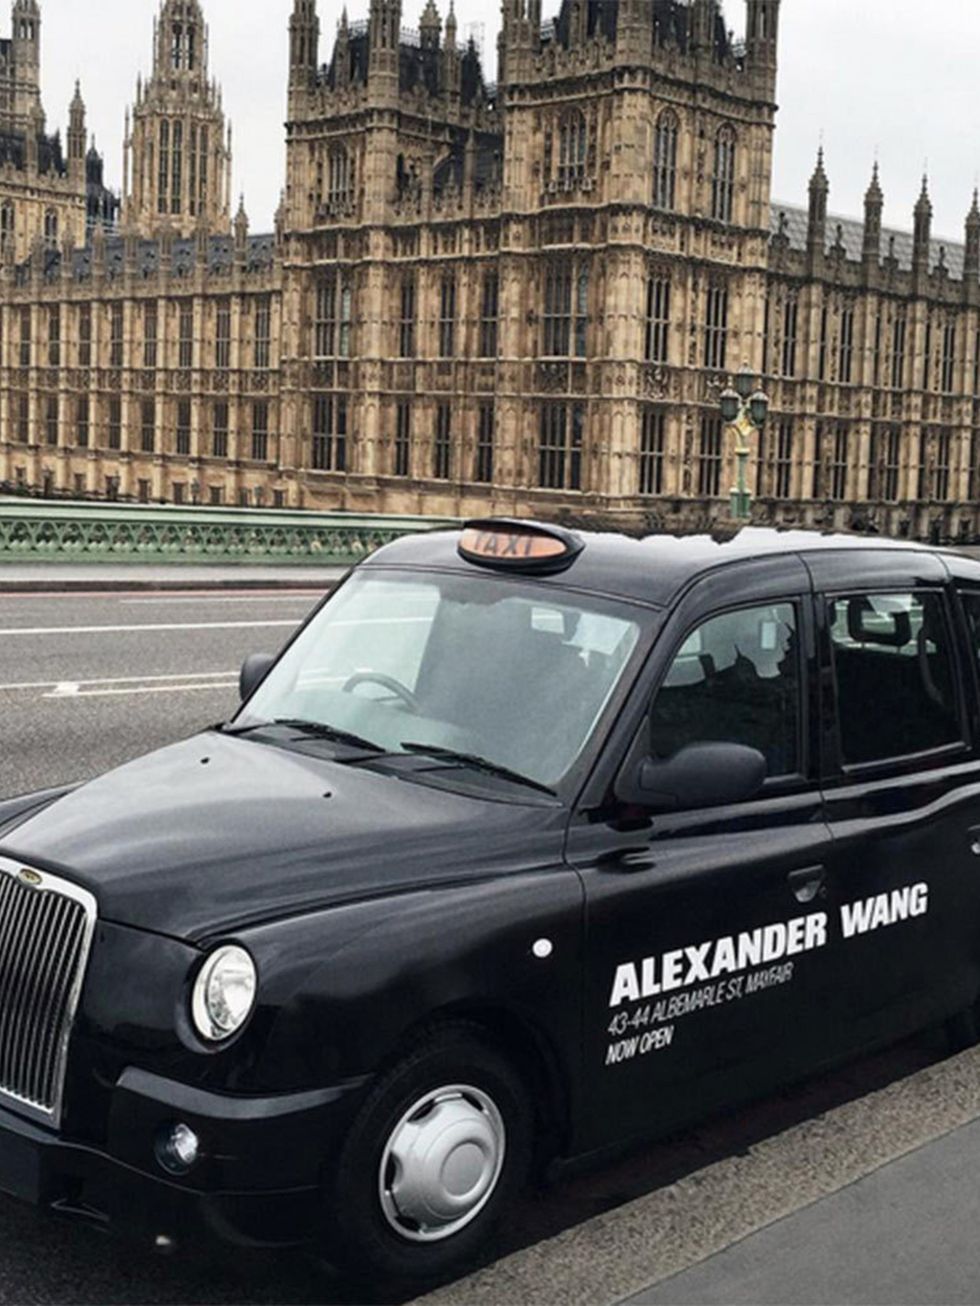 Alexander Wang (alexanderwangny)

The #AlexanderWang logo takes over black cabs to mark the opening of the new London Flagship store. Visit #AWLondon at 43-44 Albemarle Street in Mayfair #AWDebut